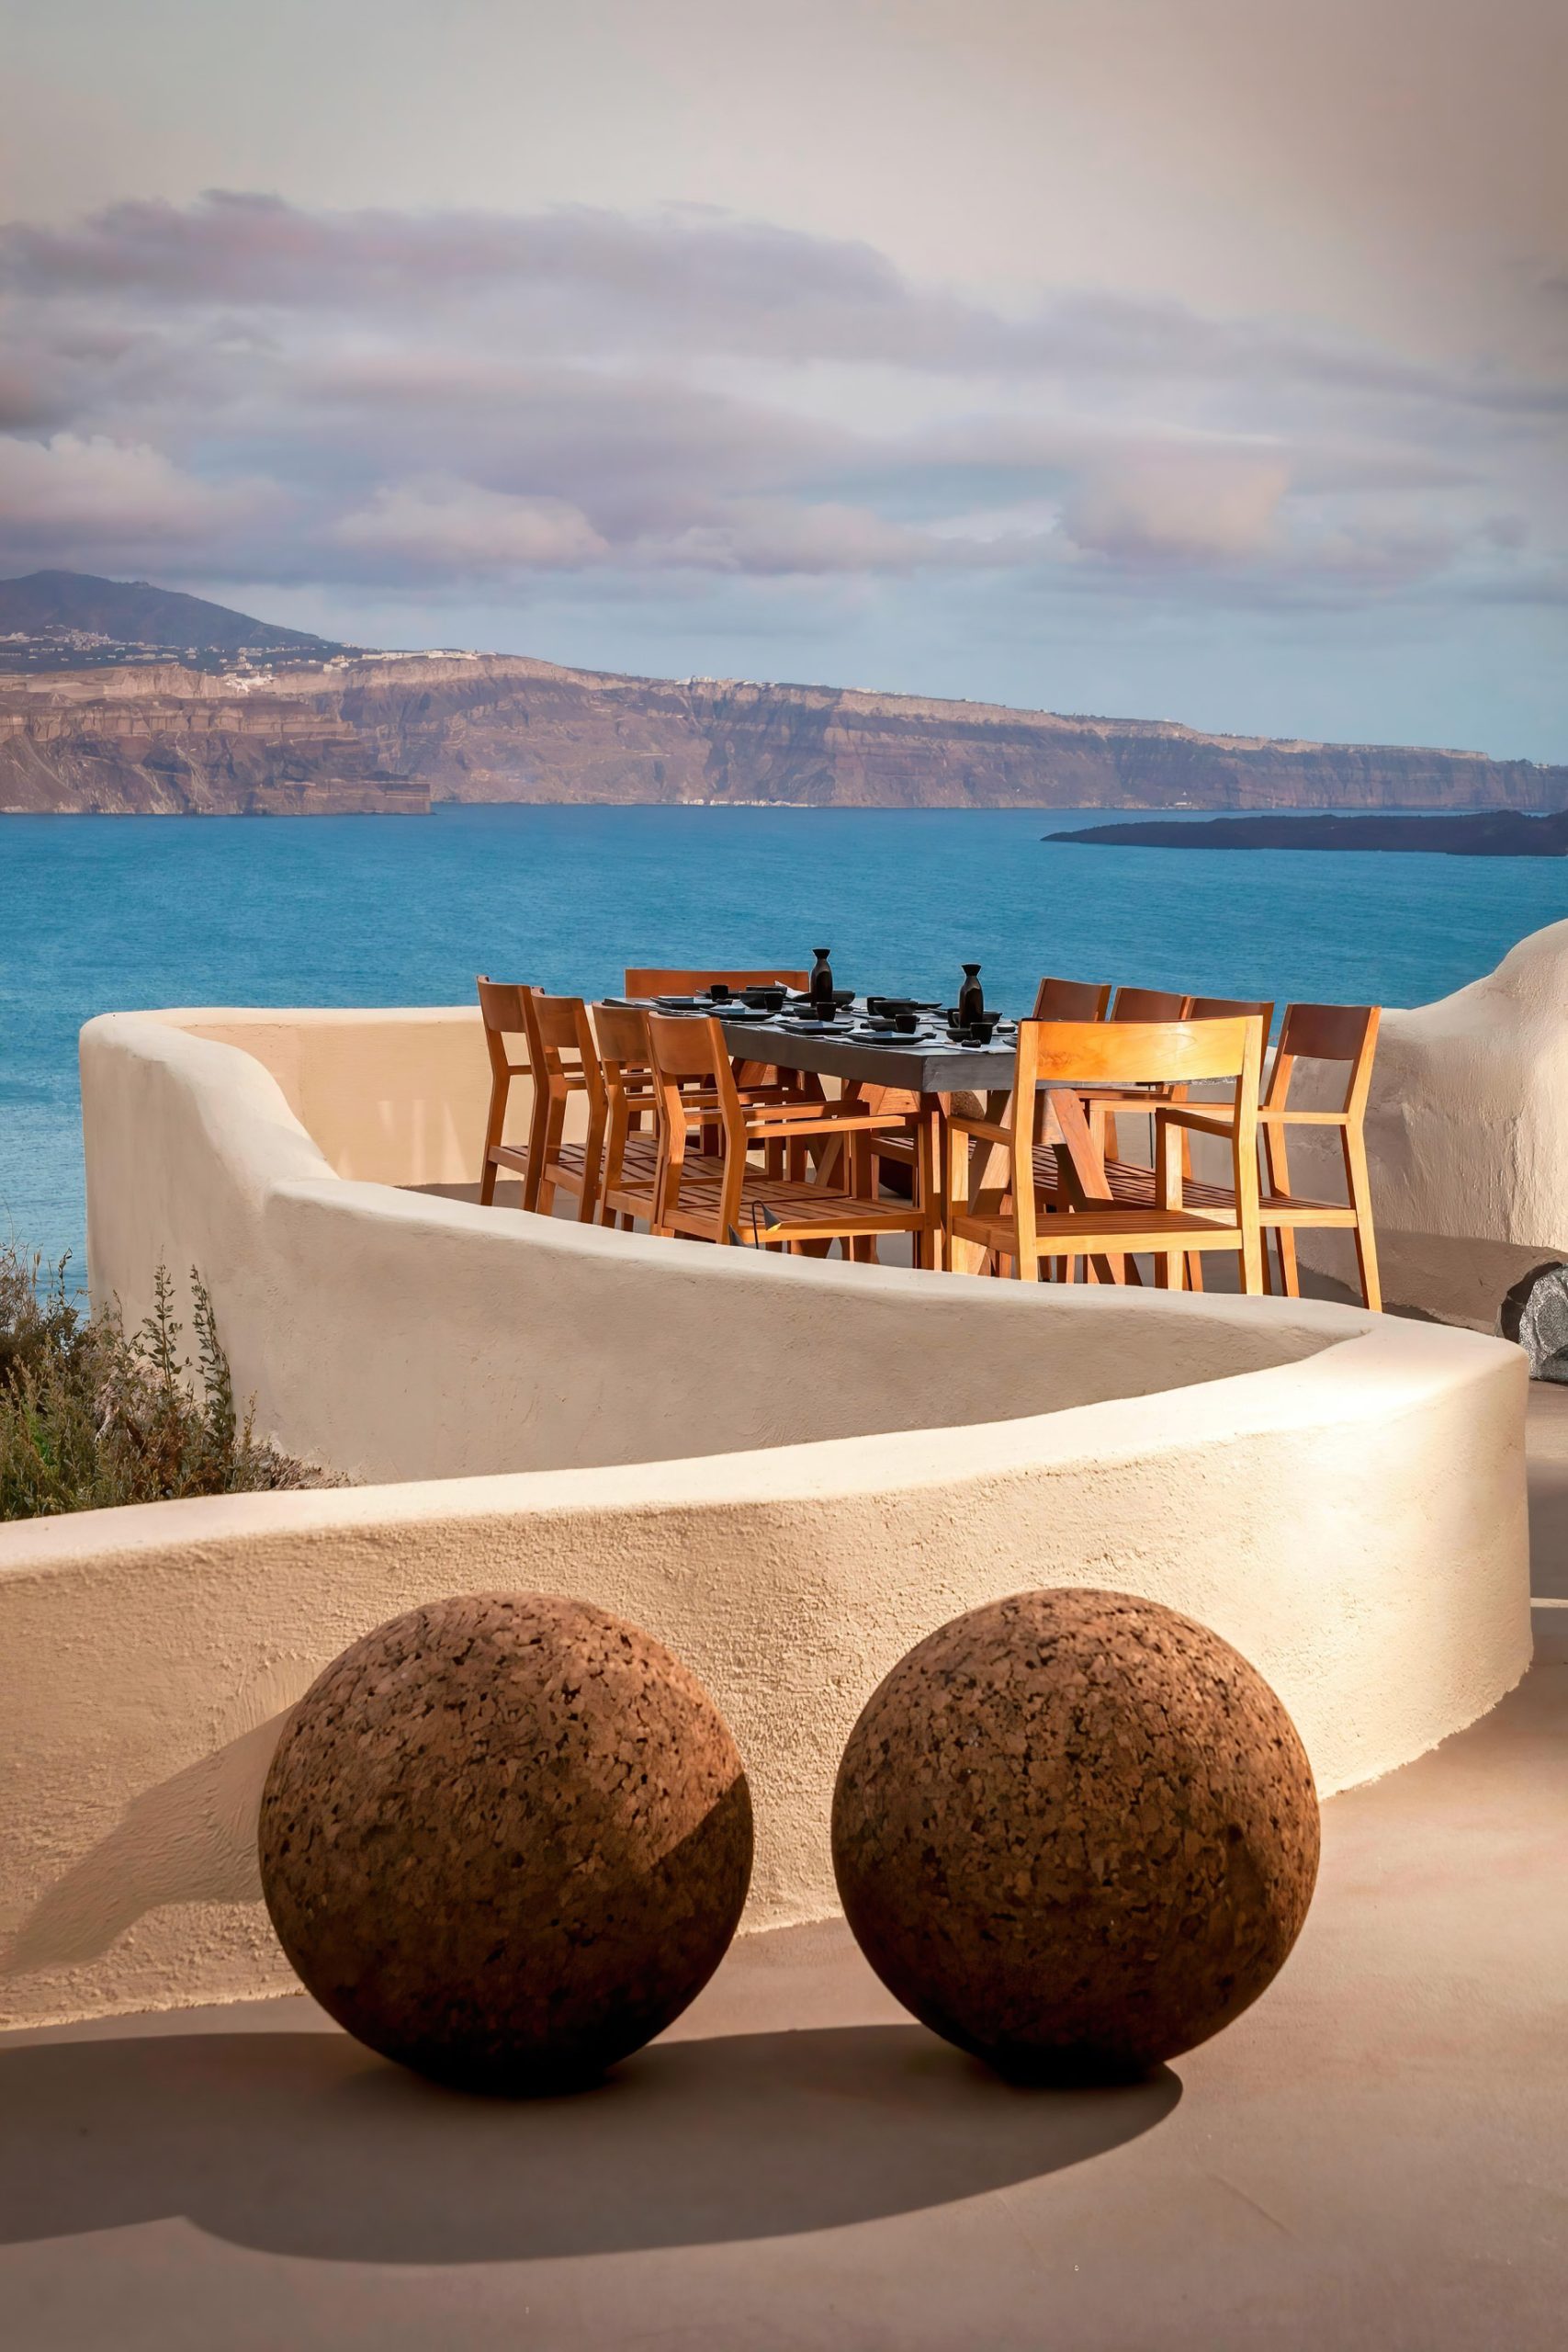 Mystique Hotel Santorini – Oia, Santorini Island, Greece – ASEA Restaurant Table Sea View